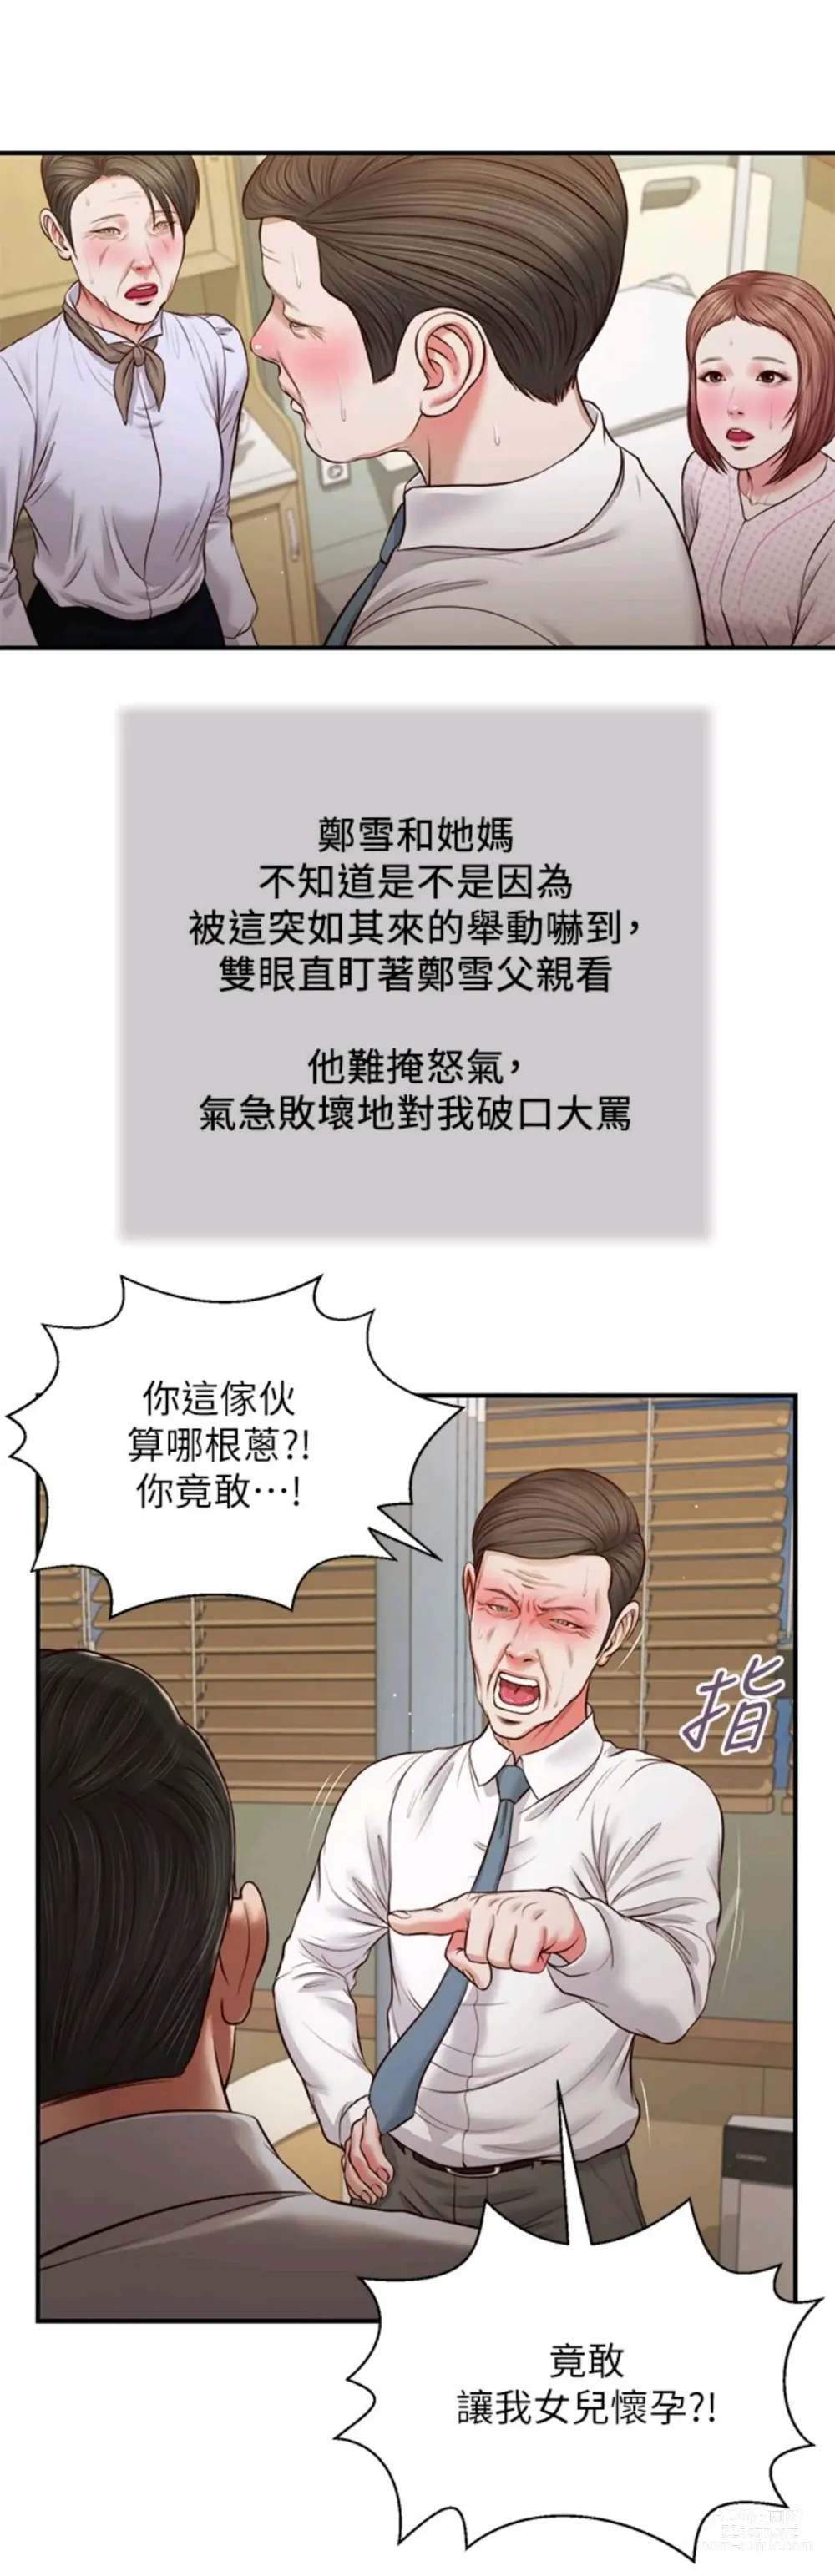 Page 1754 of manga 小妾 1-70话